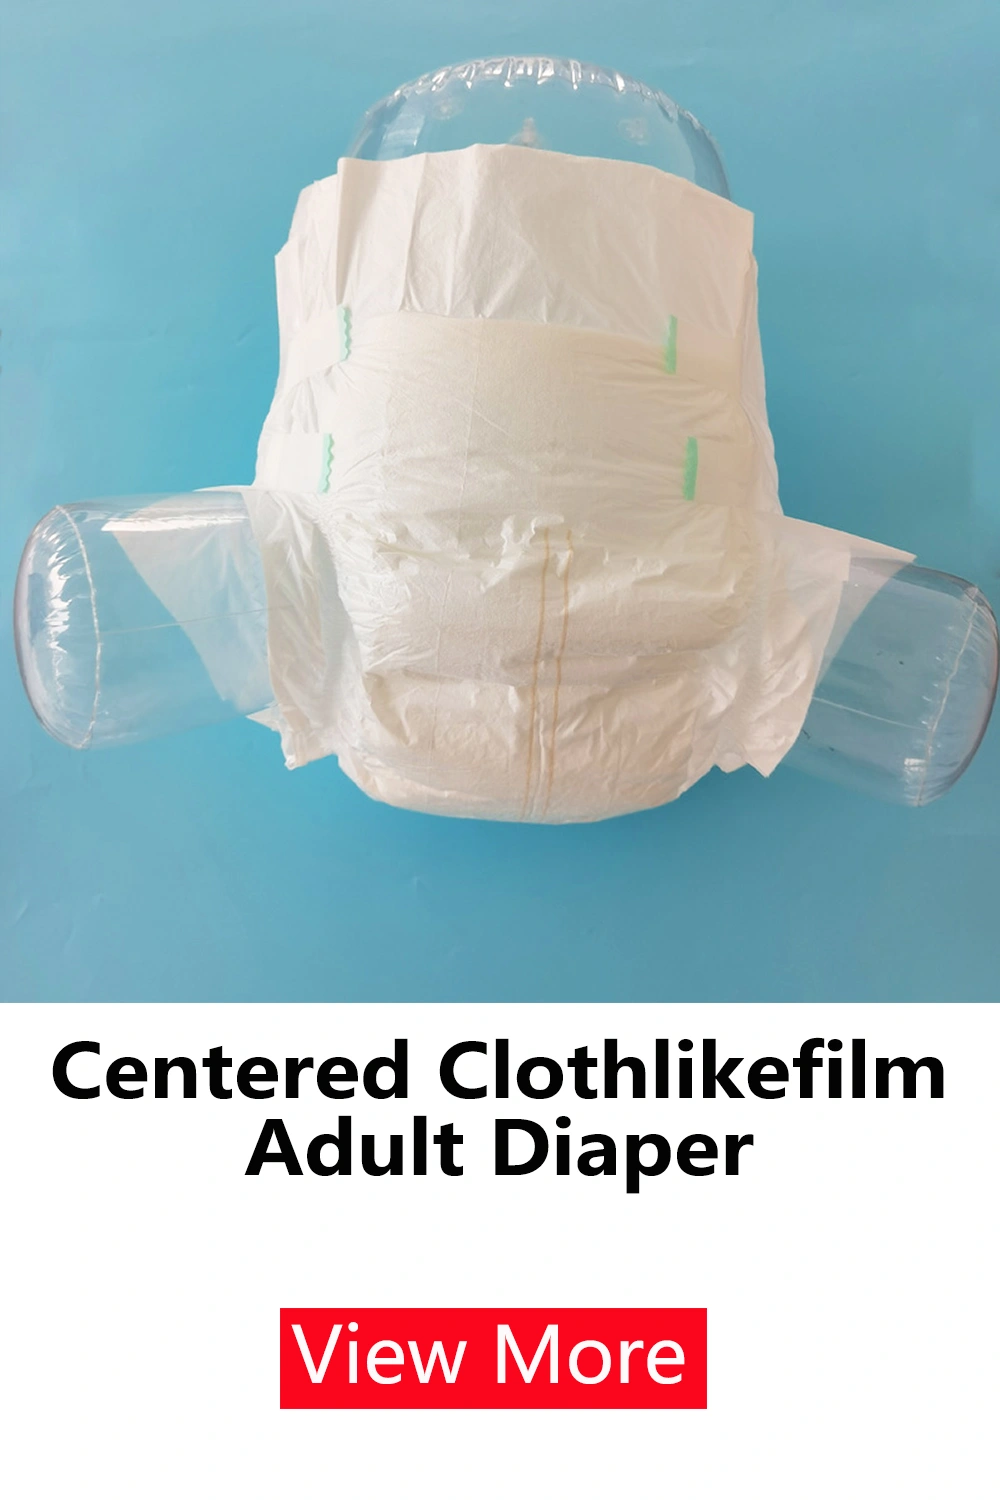 Centered clothlikefilm adult diaper picture disposable diaper liner